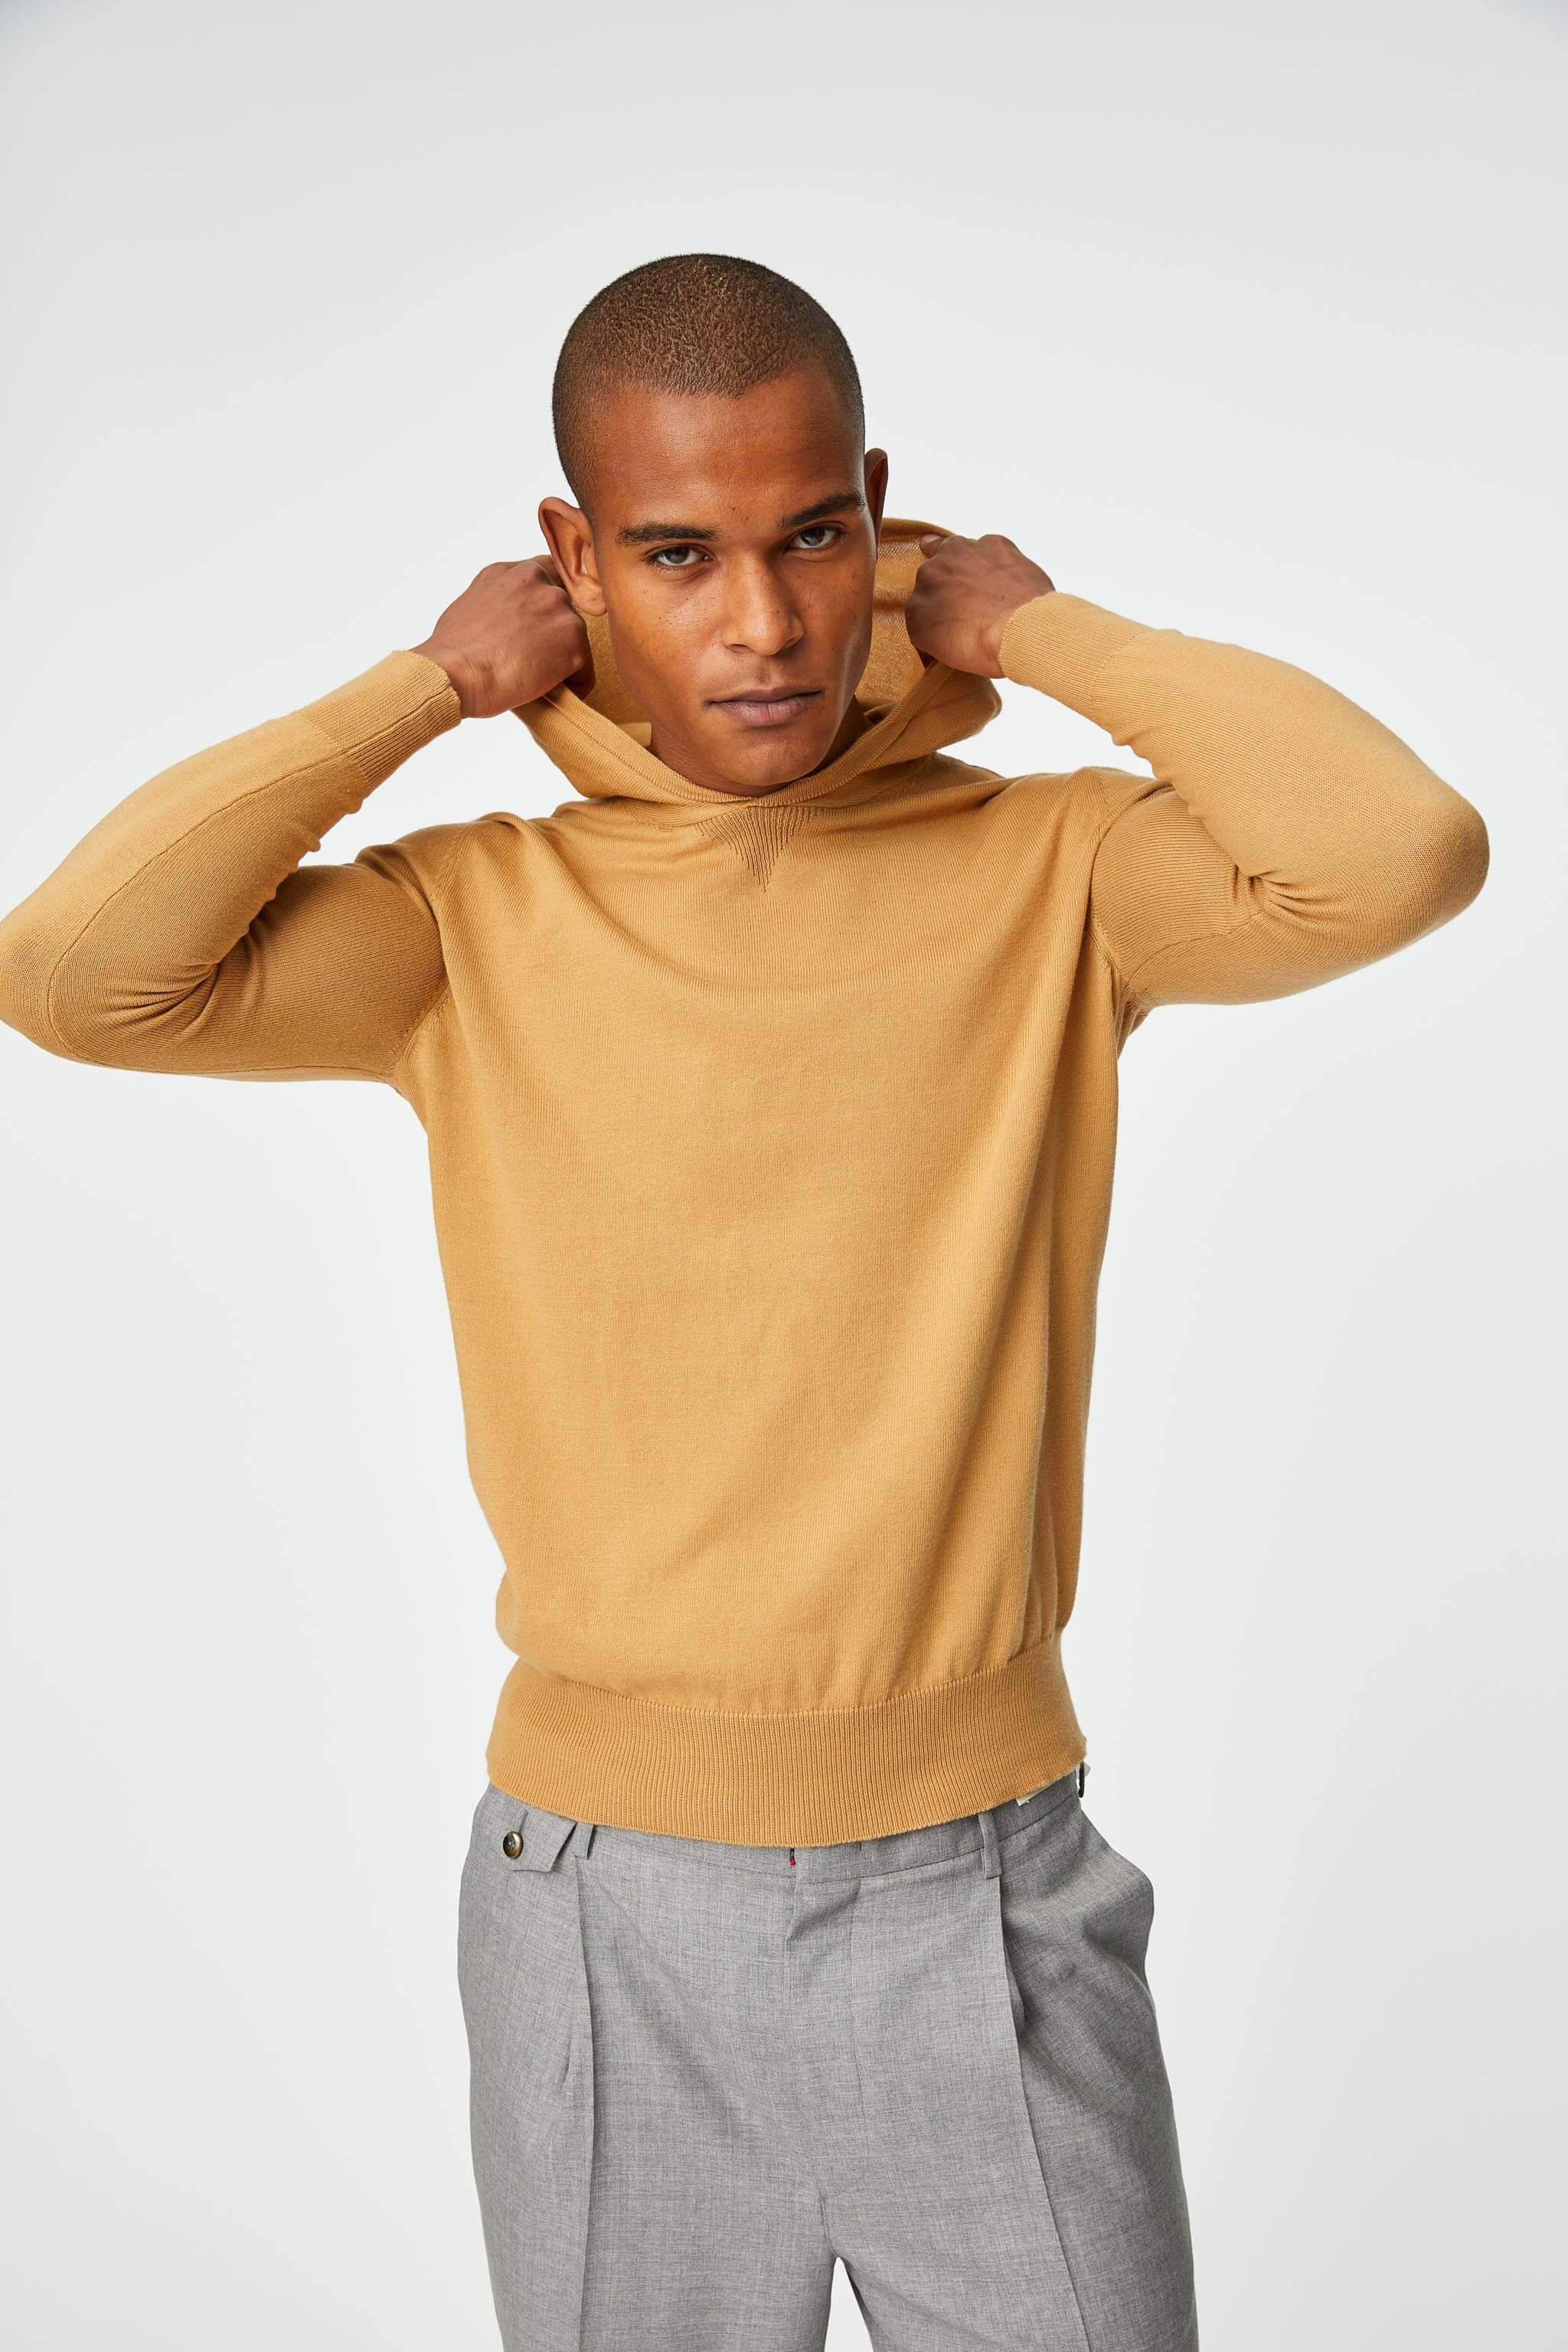 Cotton knit Hoodie in mustard